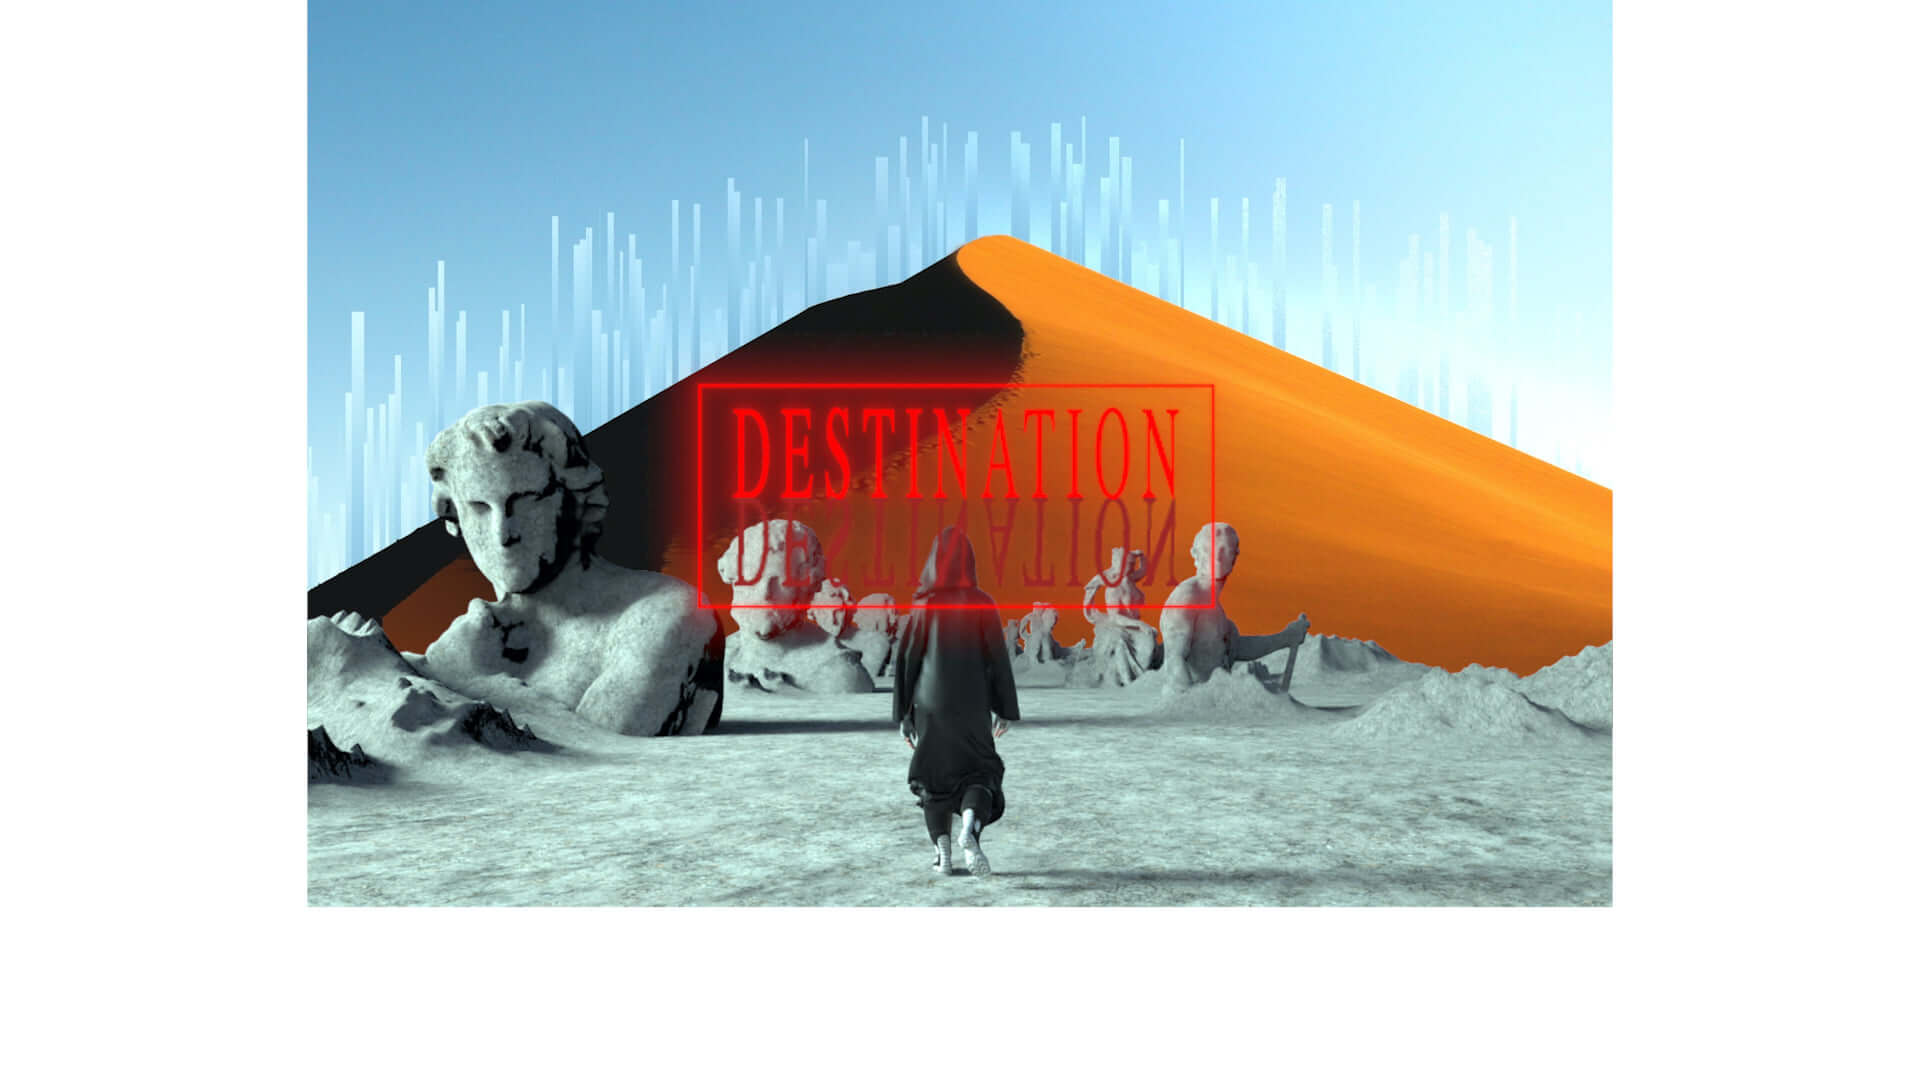 Seihoによる深夜限定のアンビエントチャンネル『DESTINATION 最終目的地』がYouTubeで始動！本日初回配信 music200602_seiho_youtube_3-1920x1080